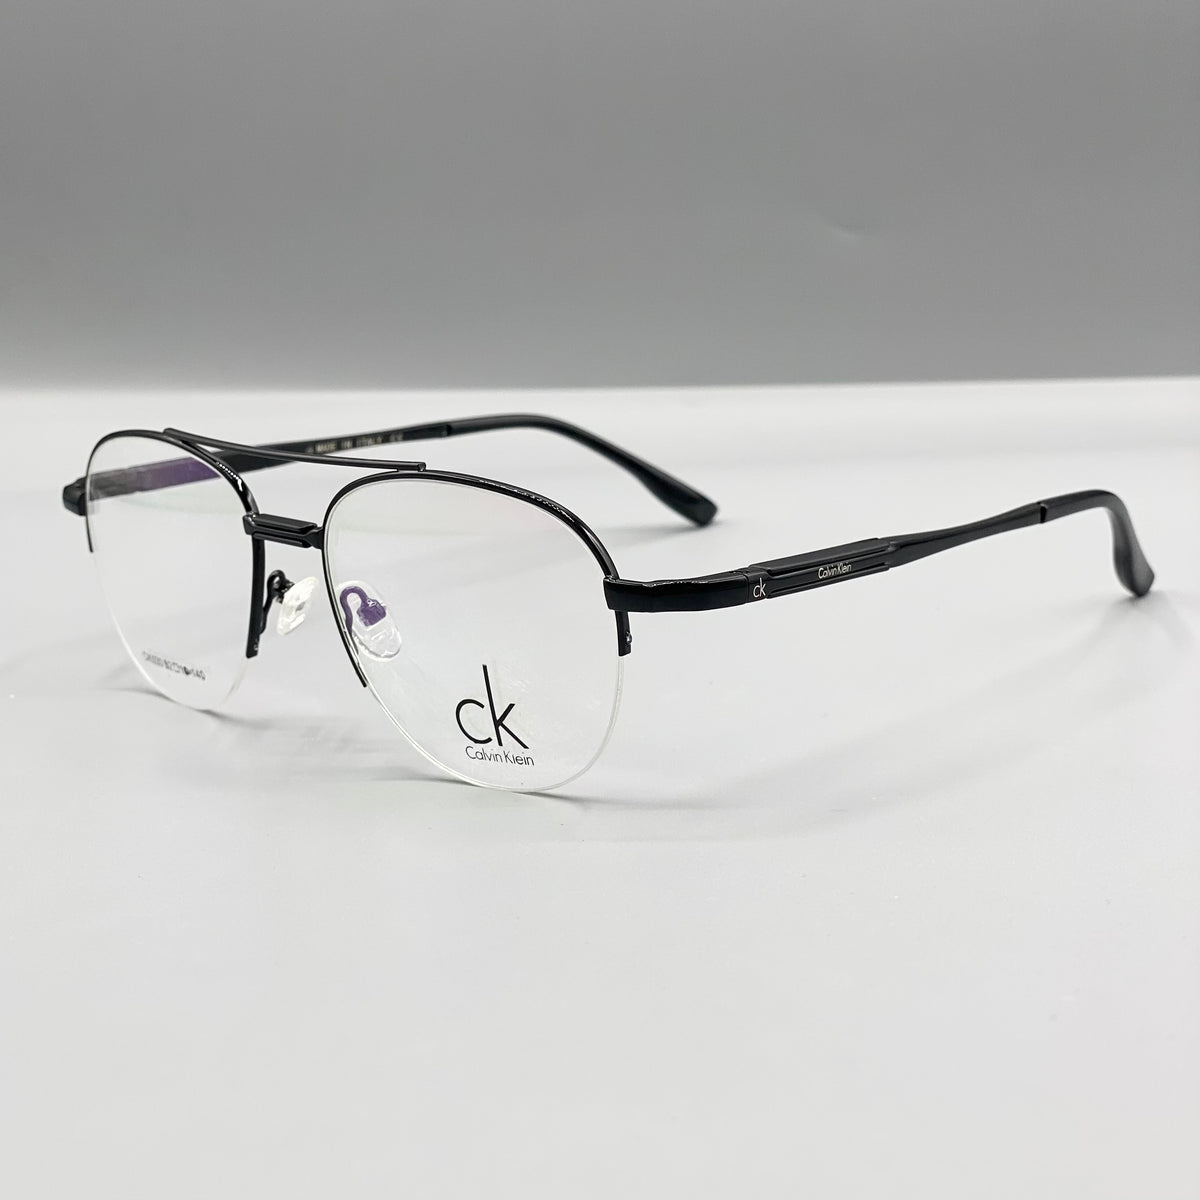 Aviator Shape Half Rimpremium Screen Protection Glasses Bl 510 — Wear Glasses